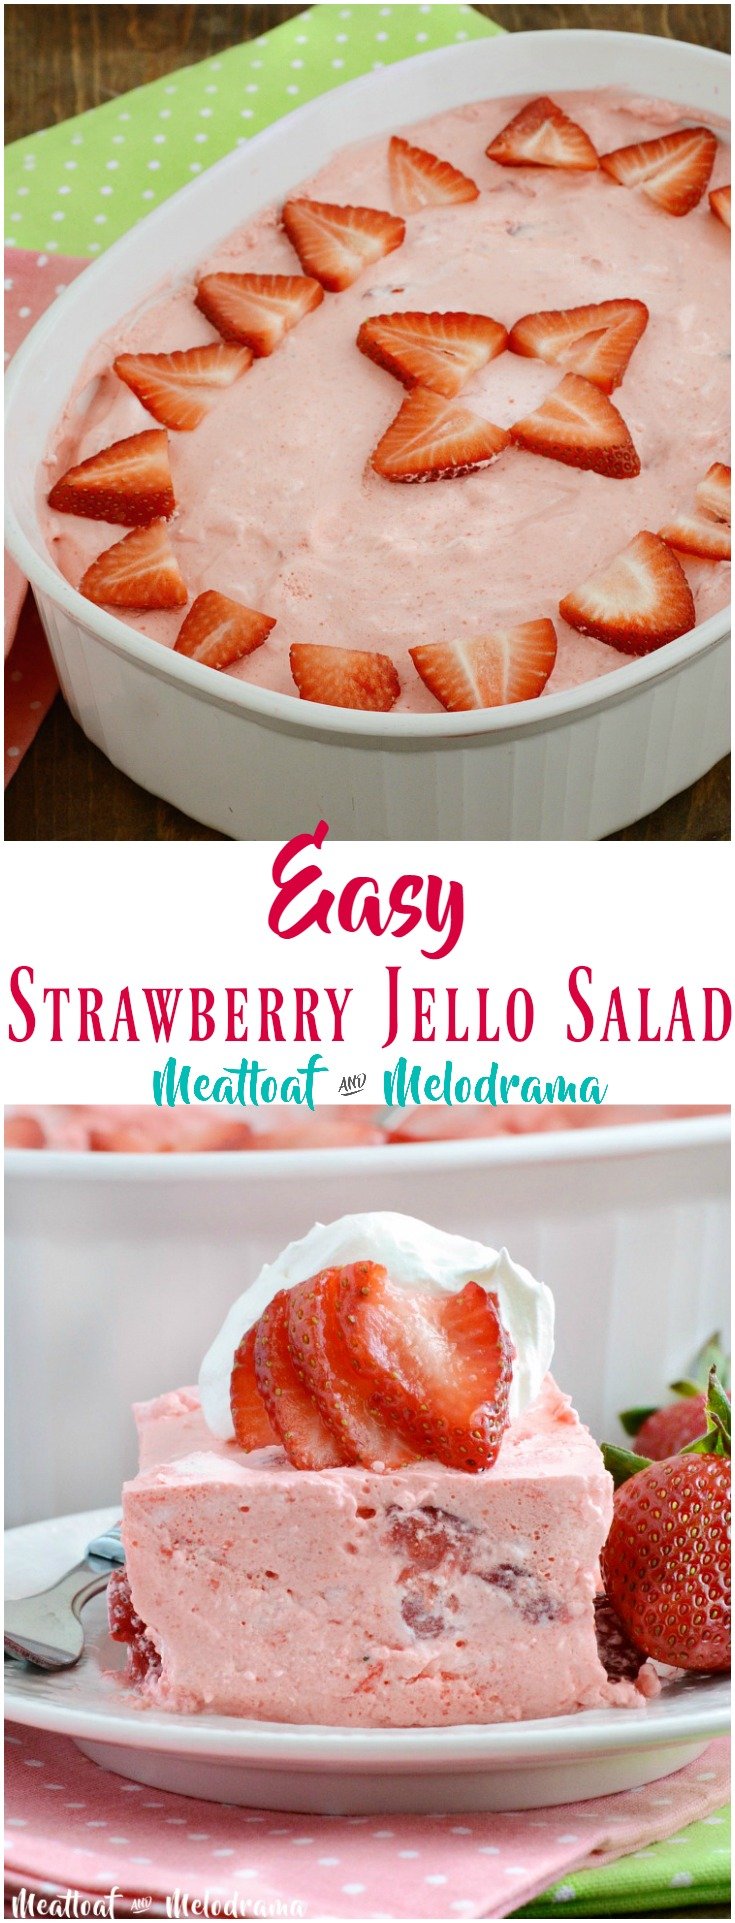 jello salad promo image for pinterest